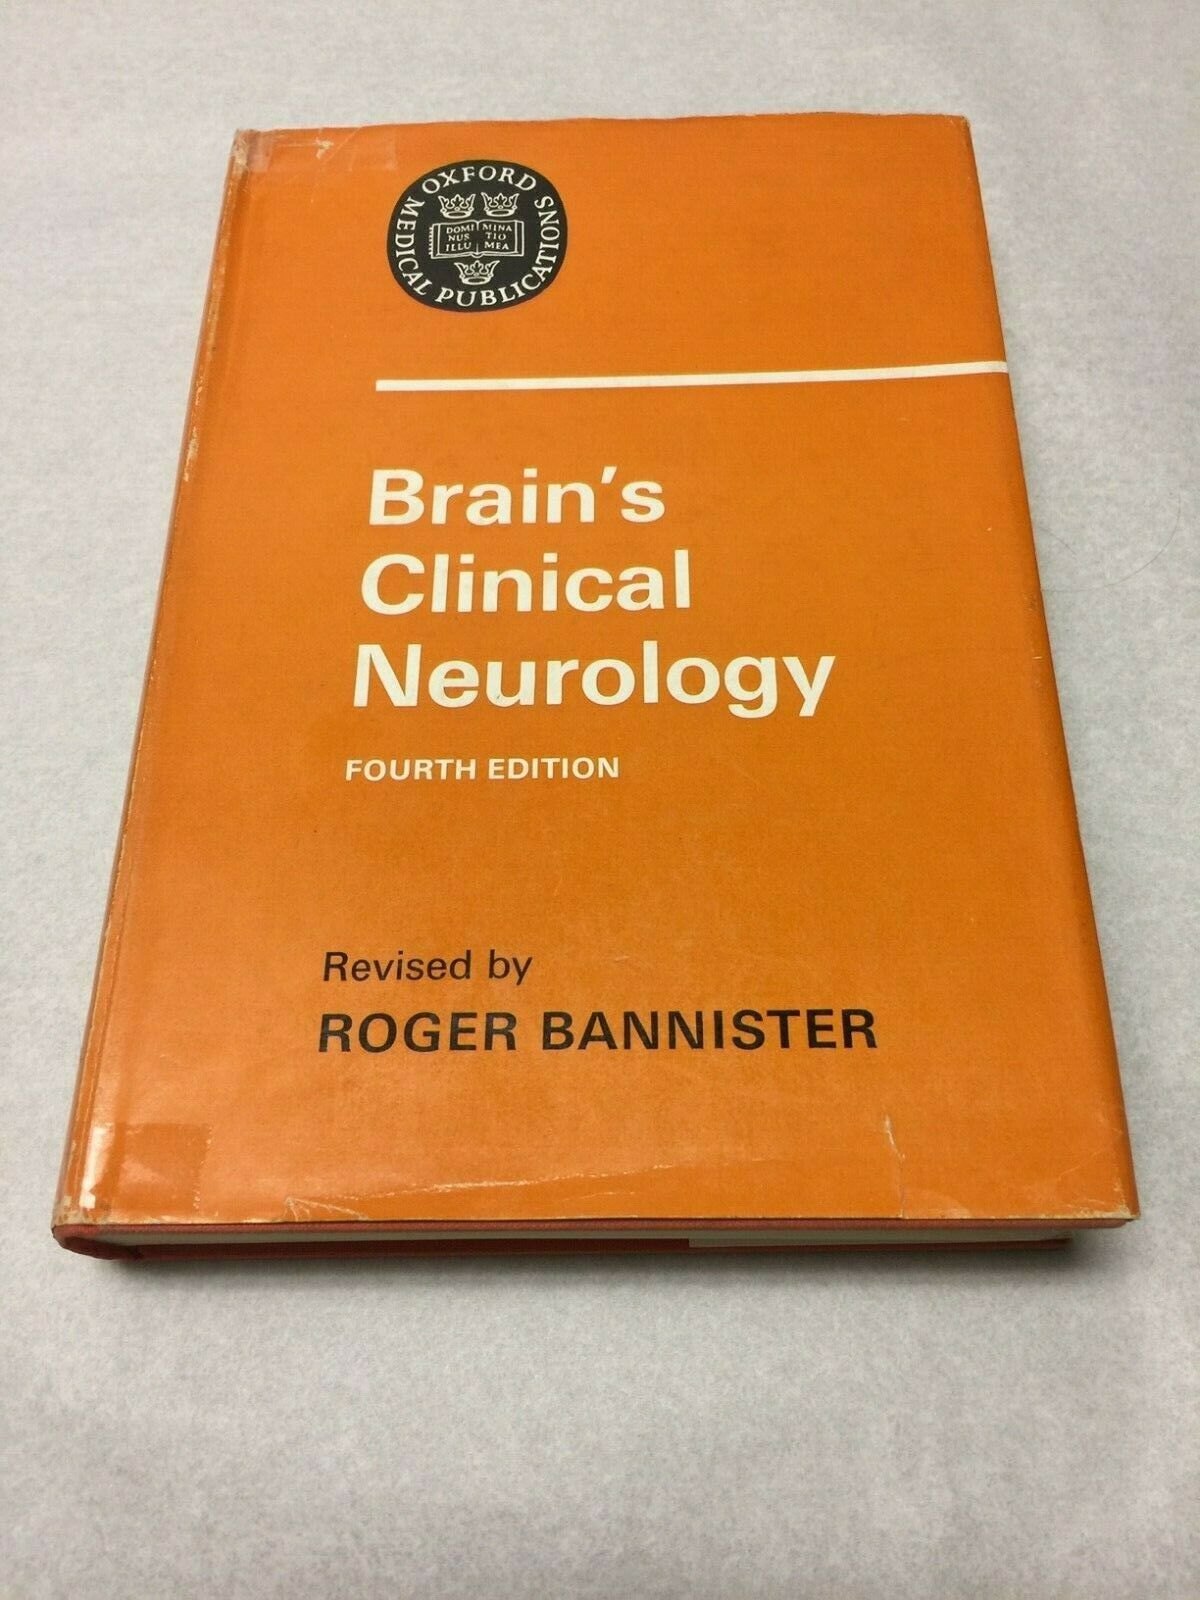 Brain's Clinical Neurology